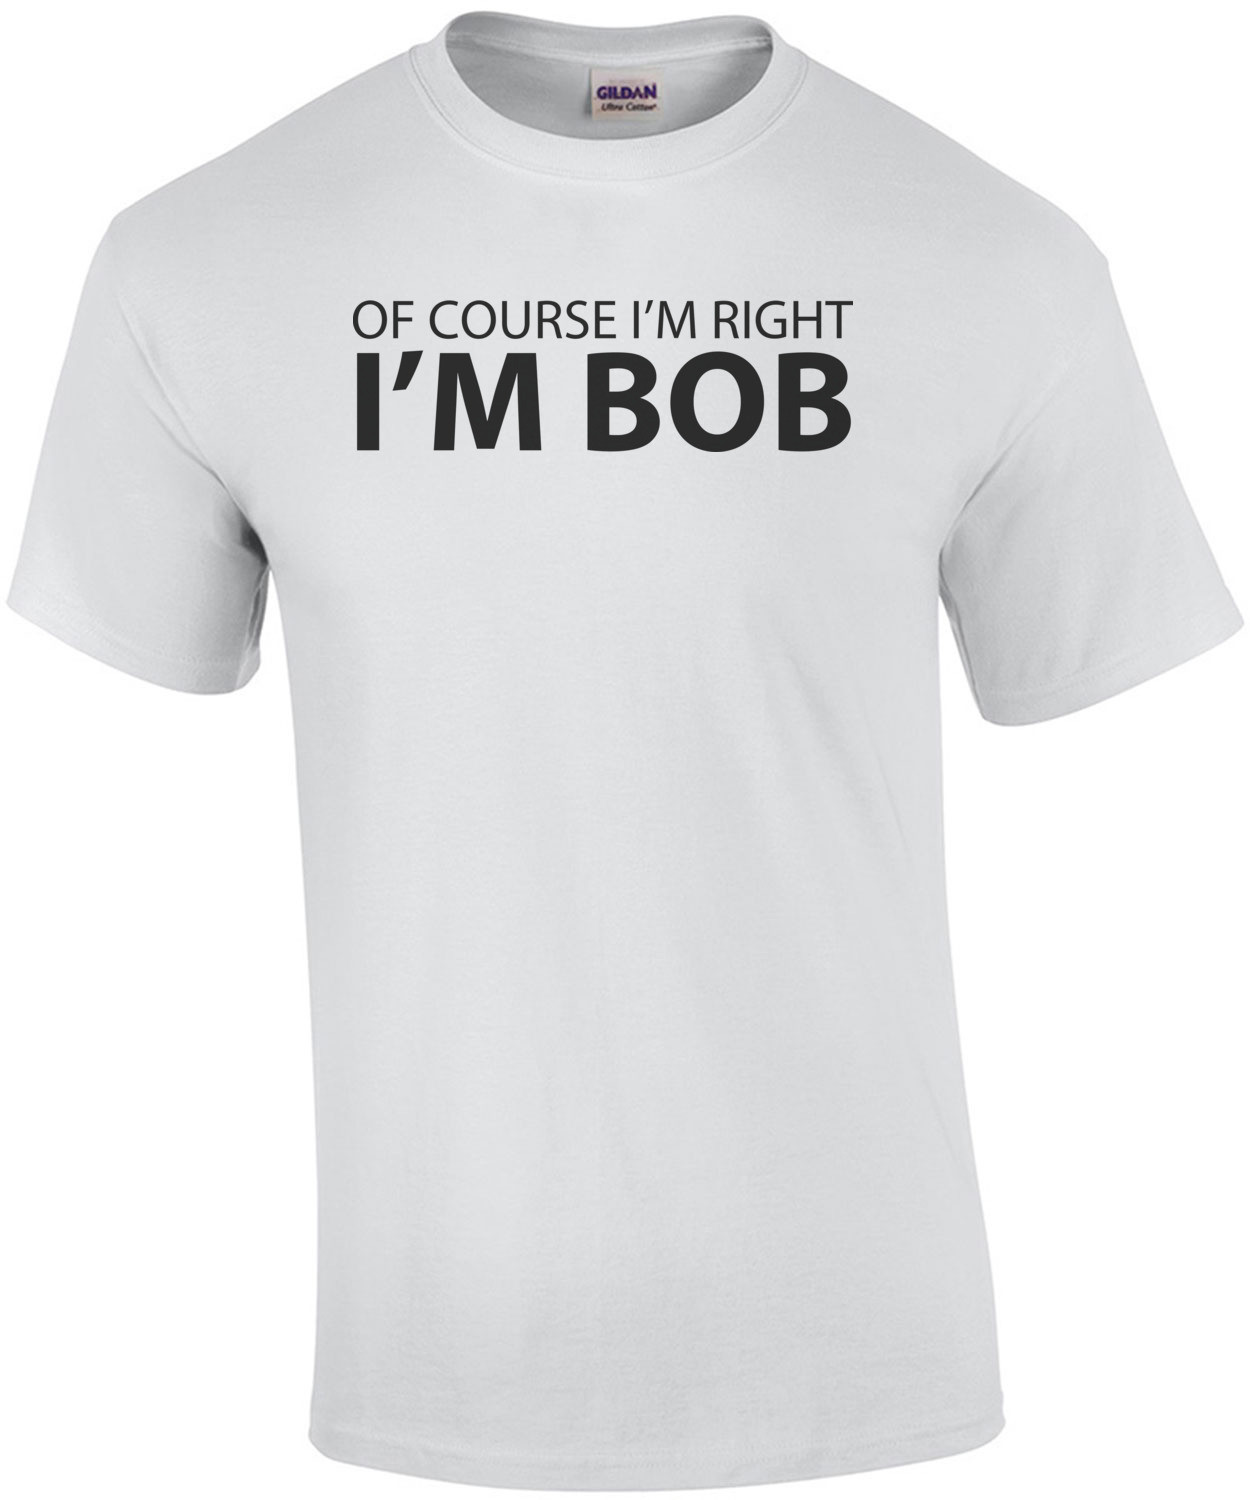 Of Course I'm Right, I'm Bob Shirt